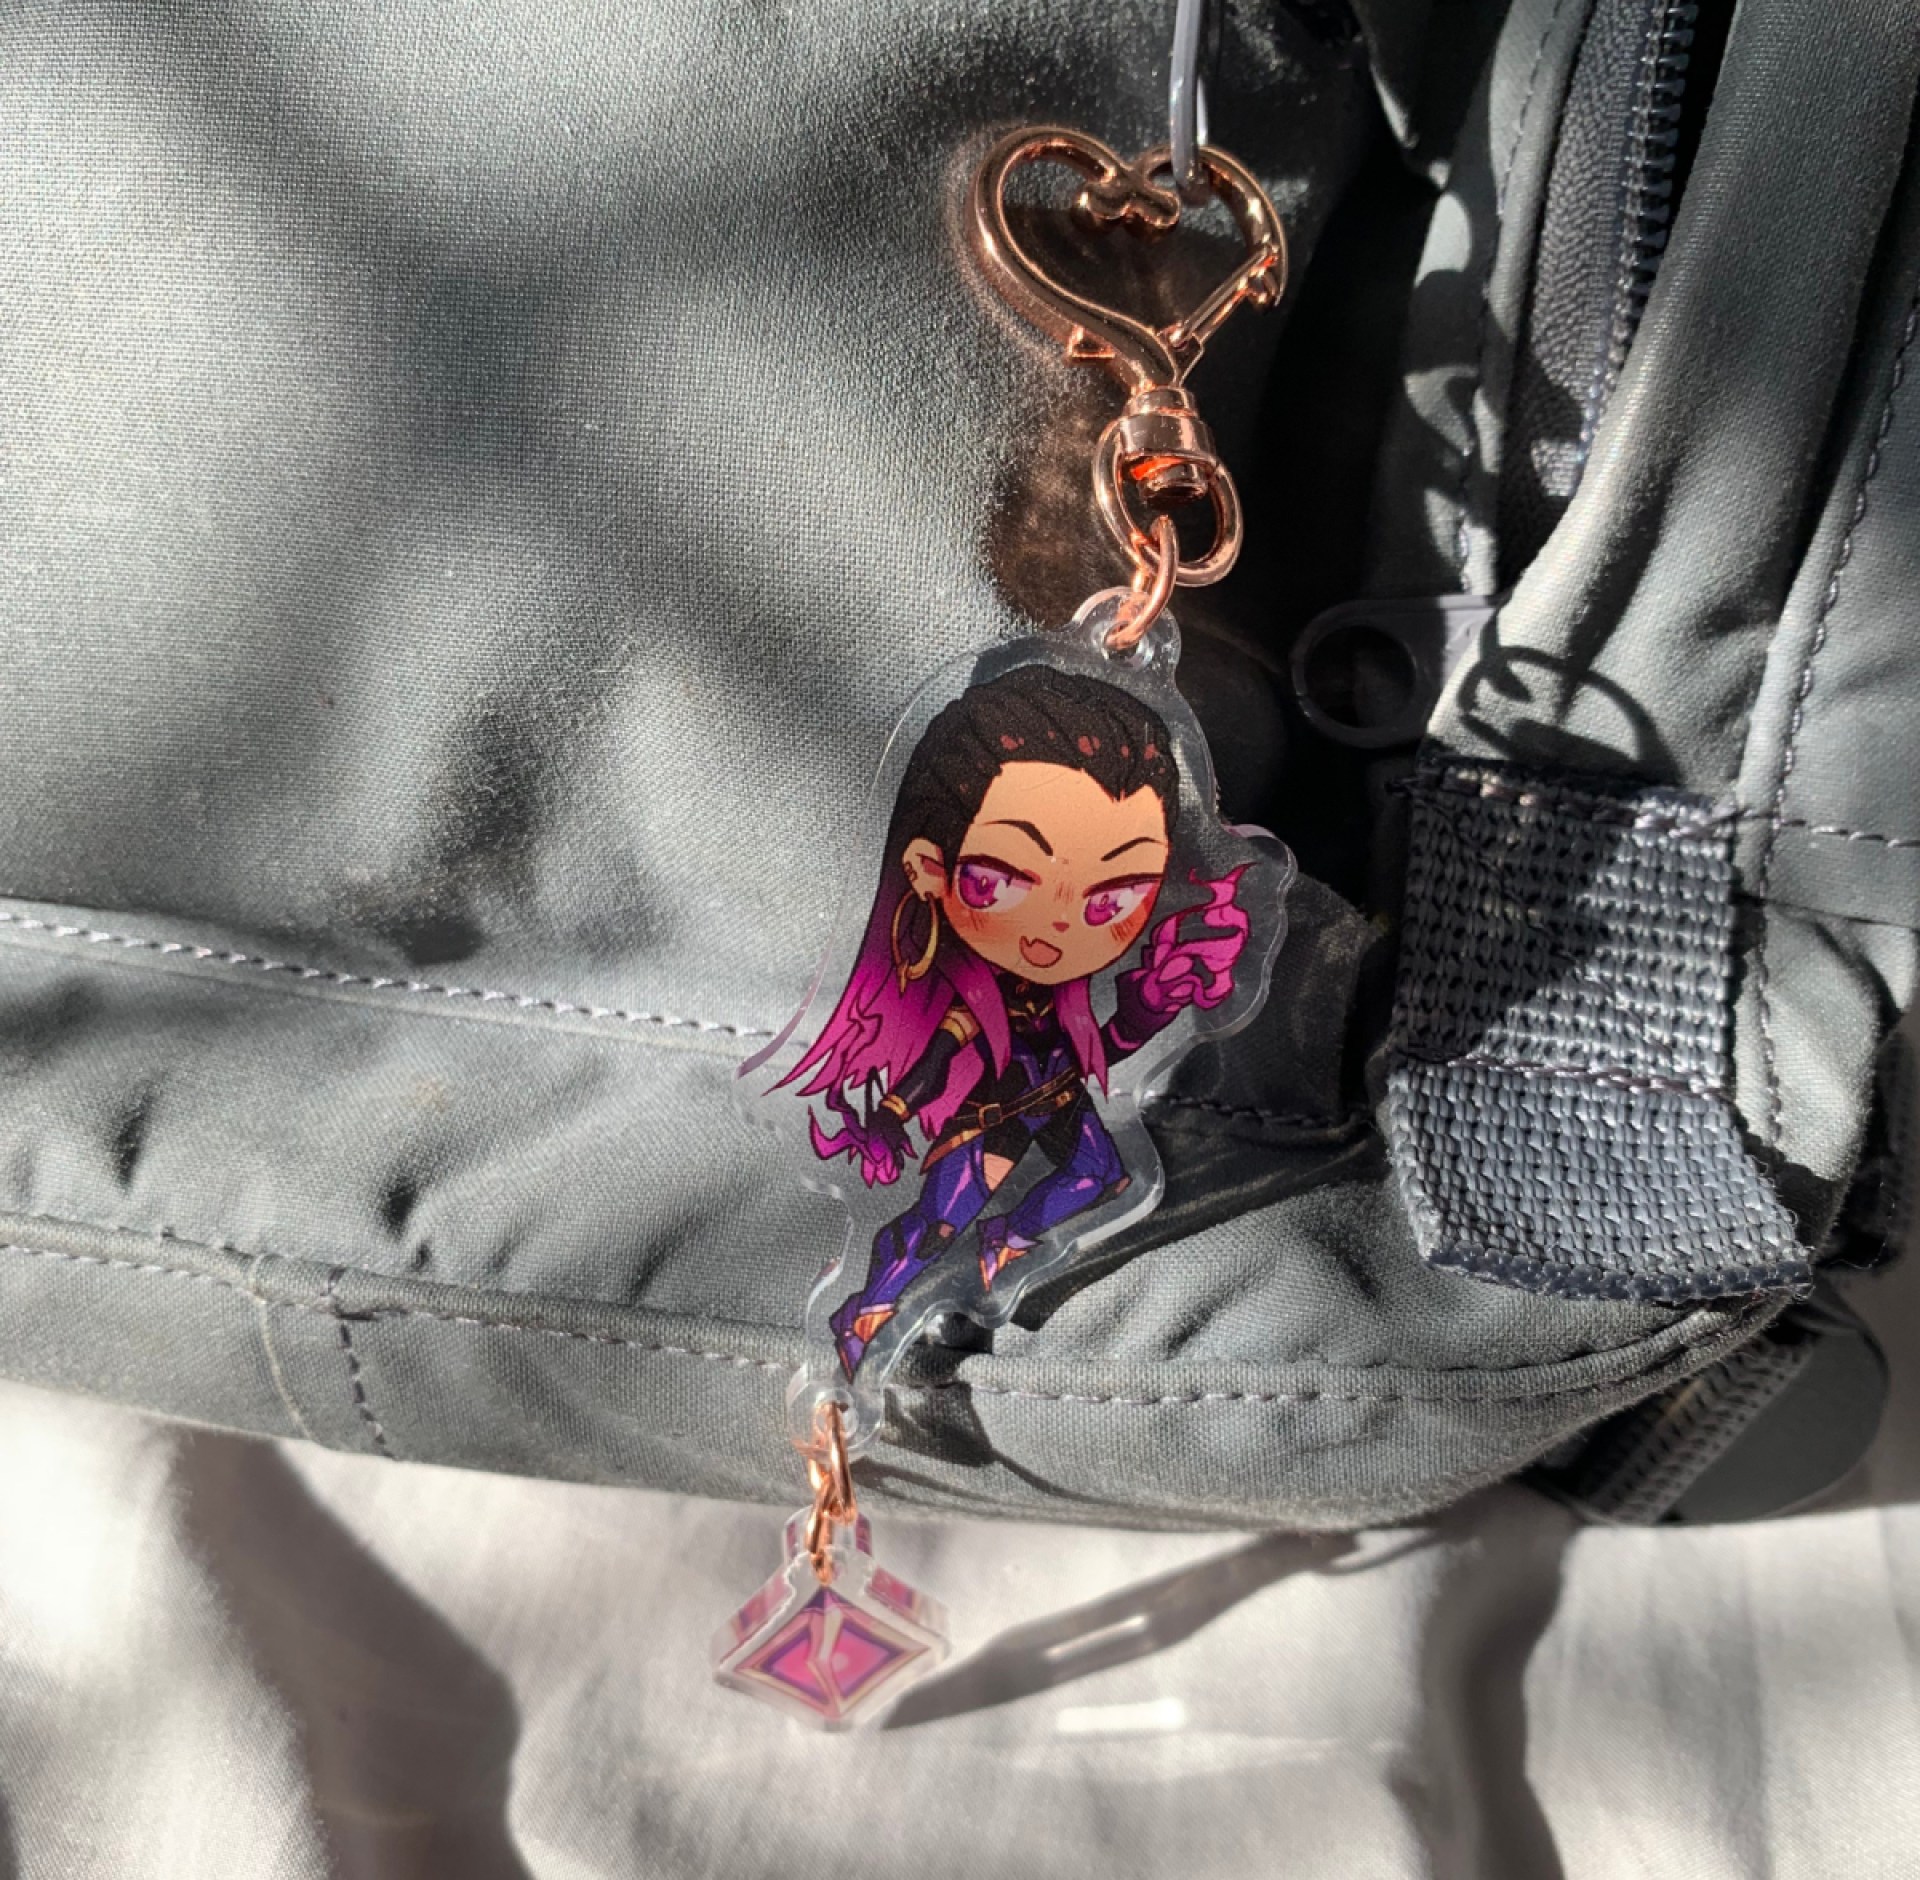 A Reyna charm from LOKIIart on Ana Valens' backpack.